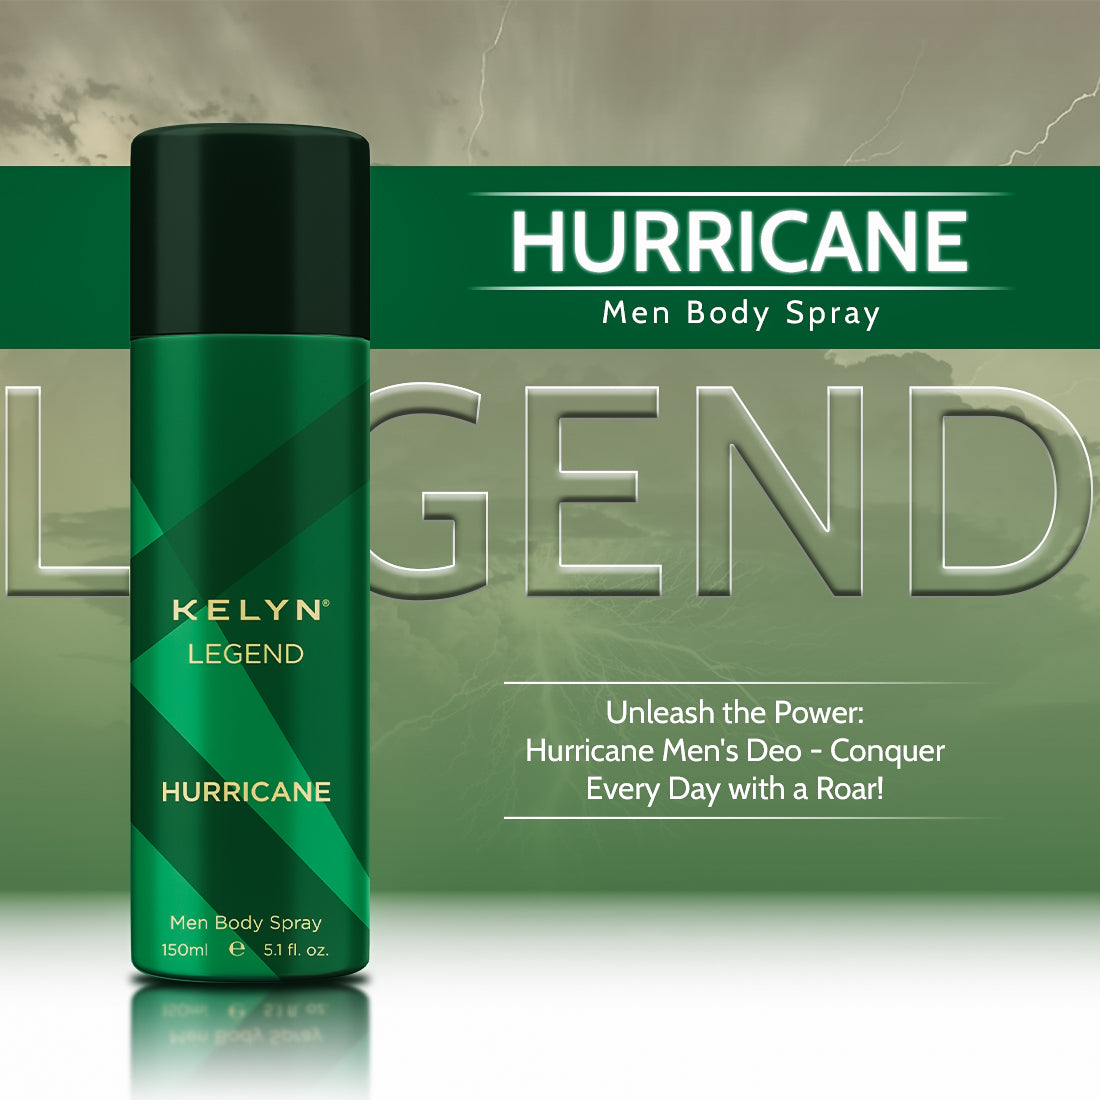 Legend Storm, Twister, Hurricane, Wave Deodorant for Men Body Spray (Pack of 4) 150 ml each